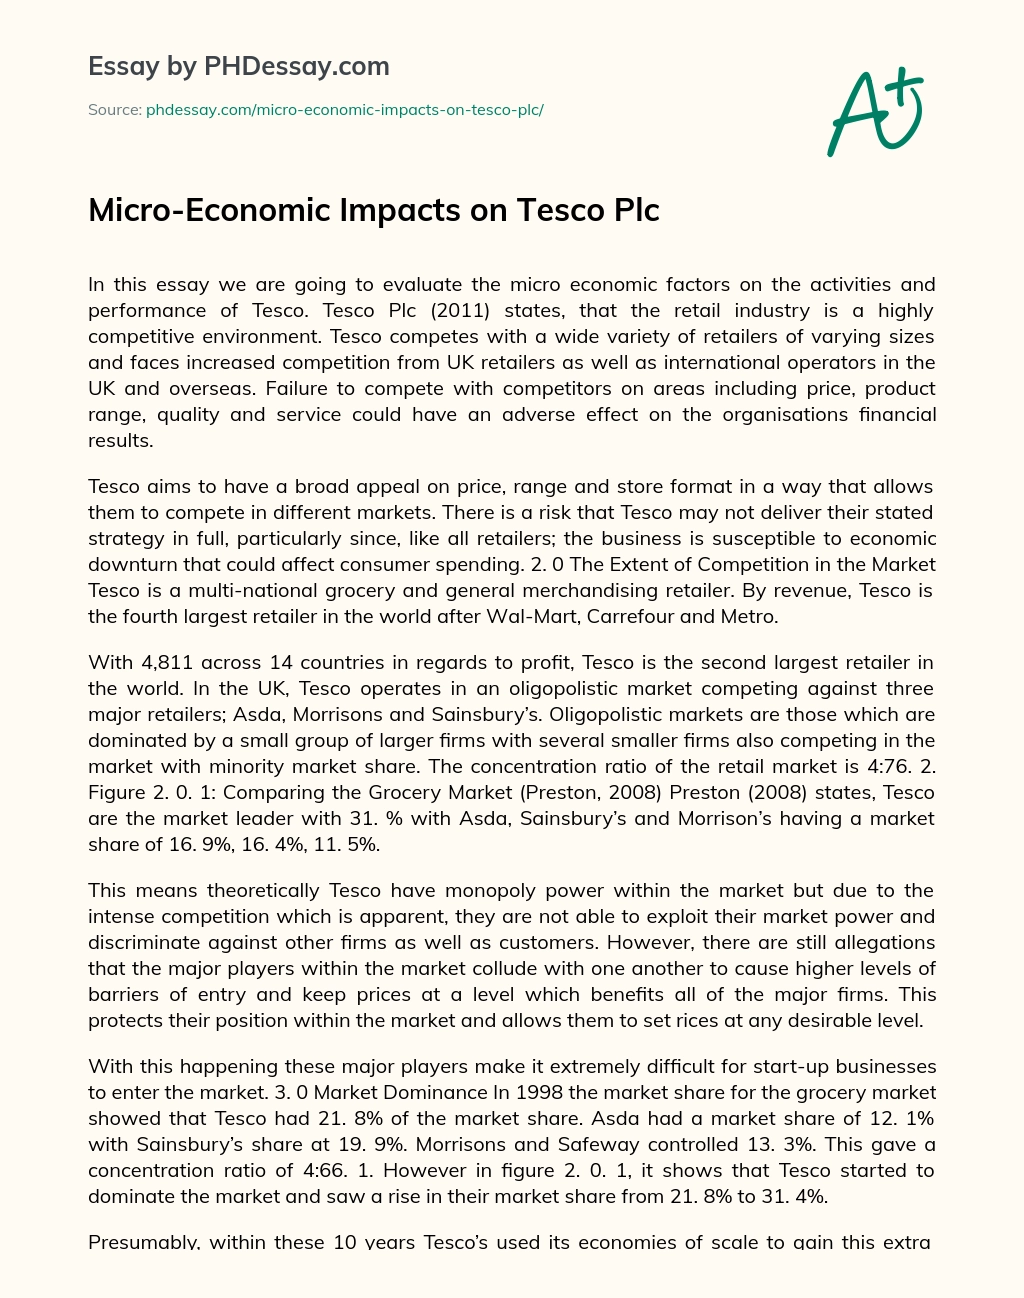 Micro-Economic Impacts on Tesco Plc essay